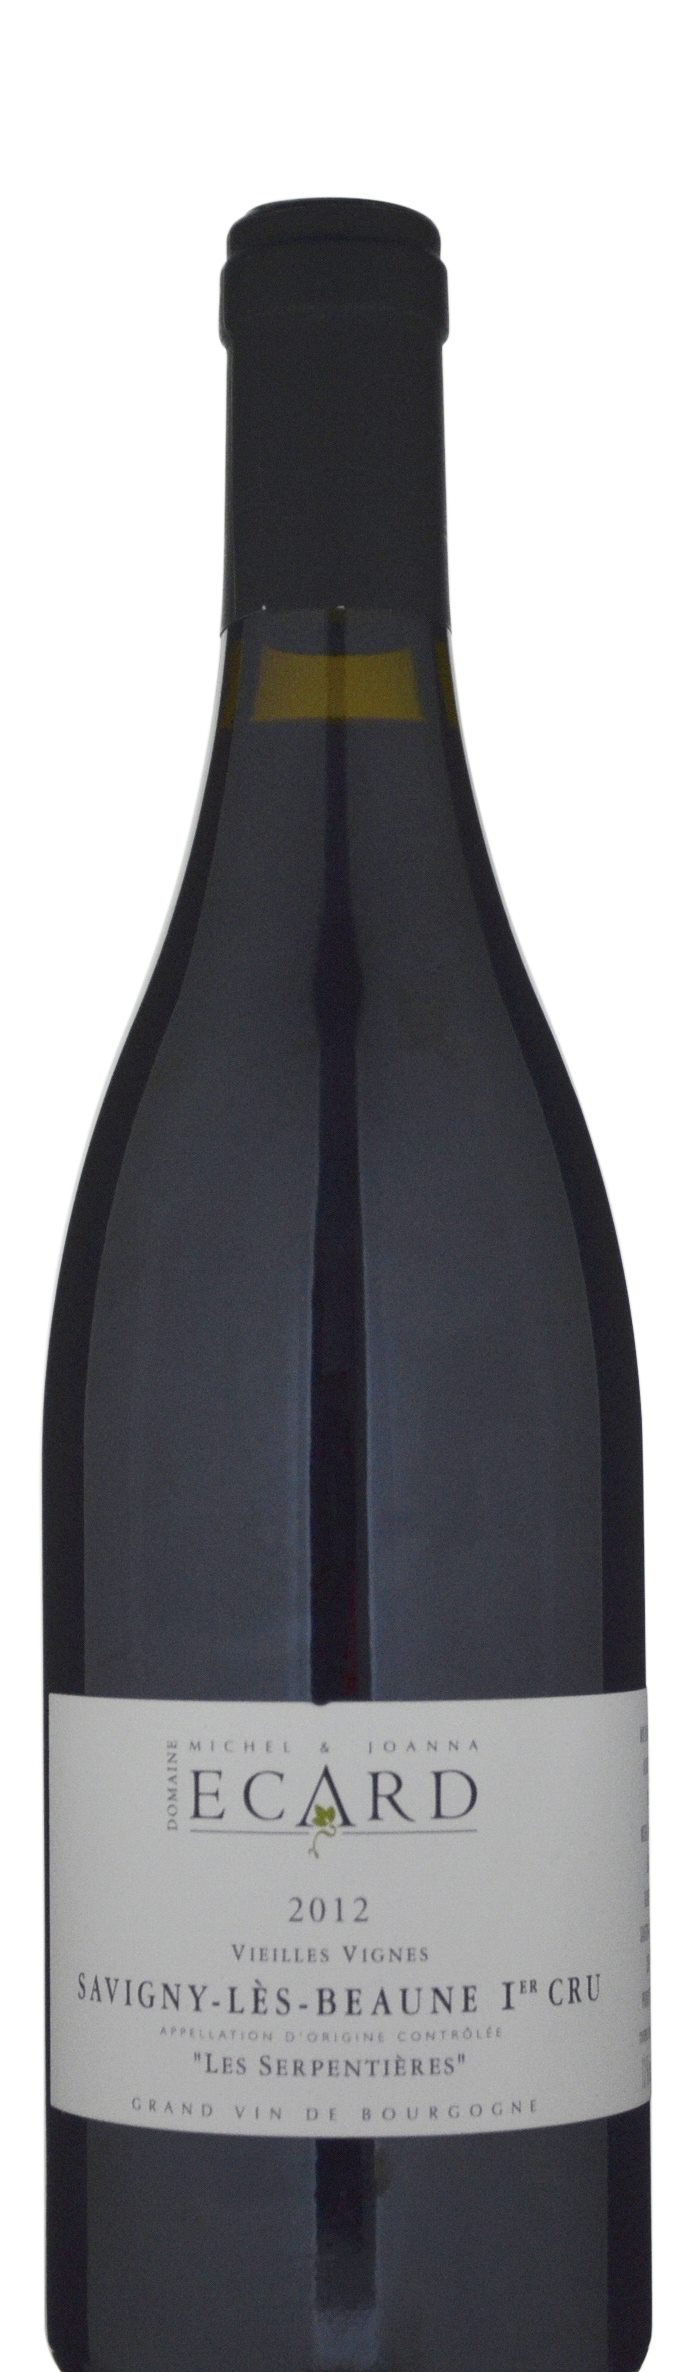 Domaine Michel & Joanna Ecard Savigny-Les-Beaune 'Les Serpentieres' 1er Cru Pinot Noir 2012